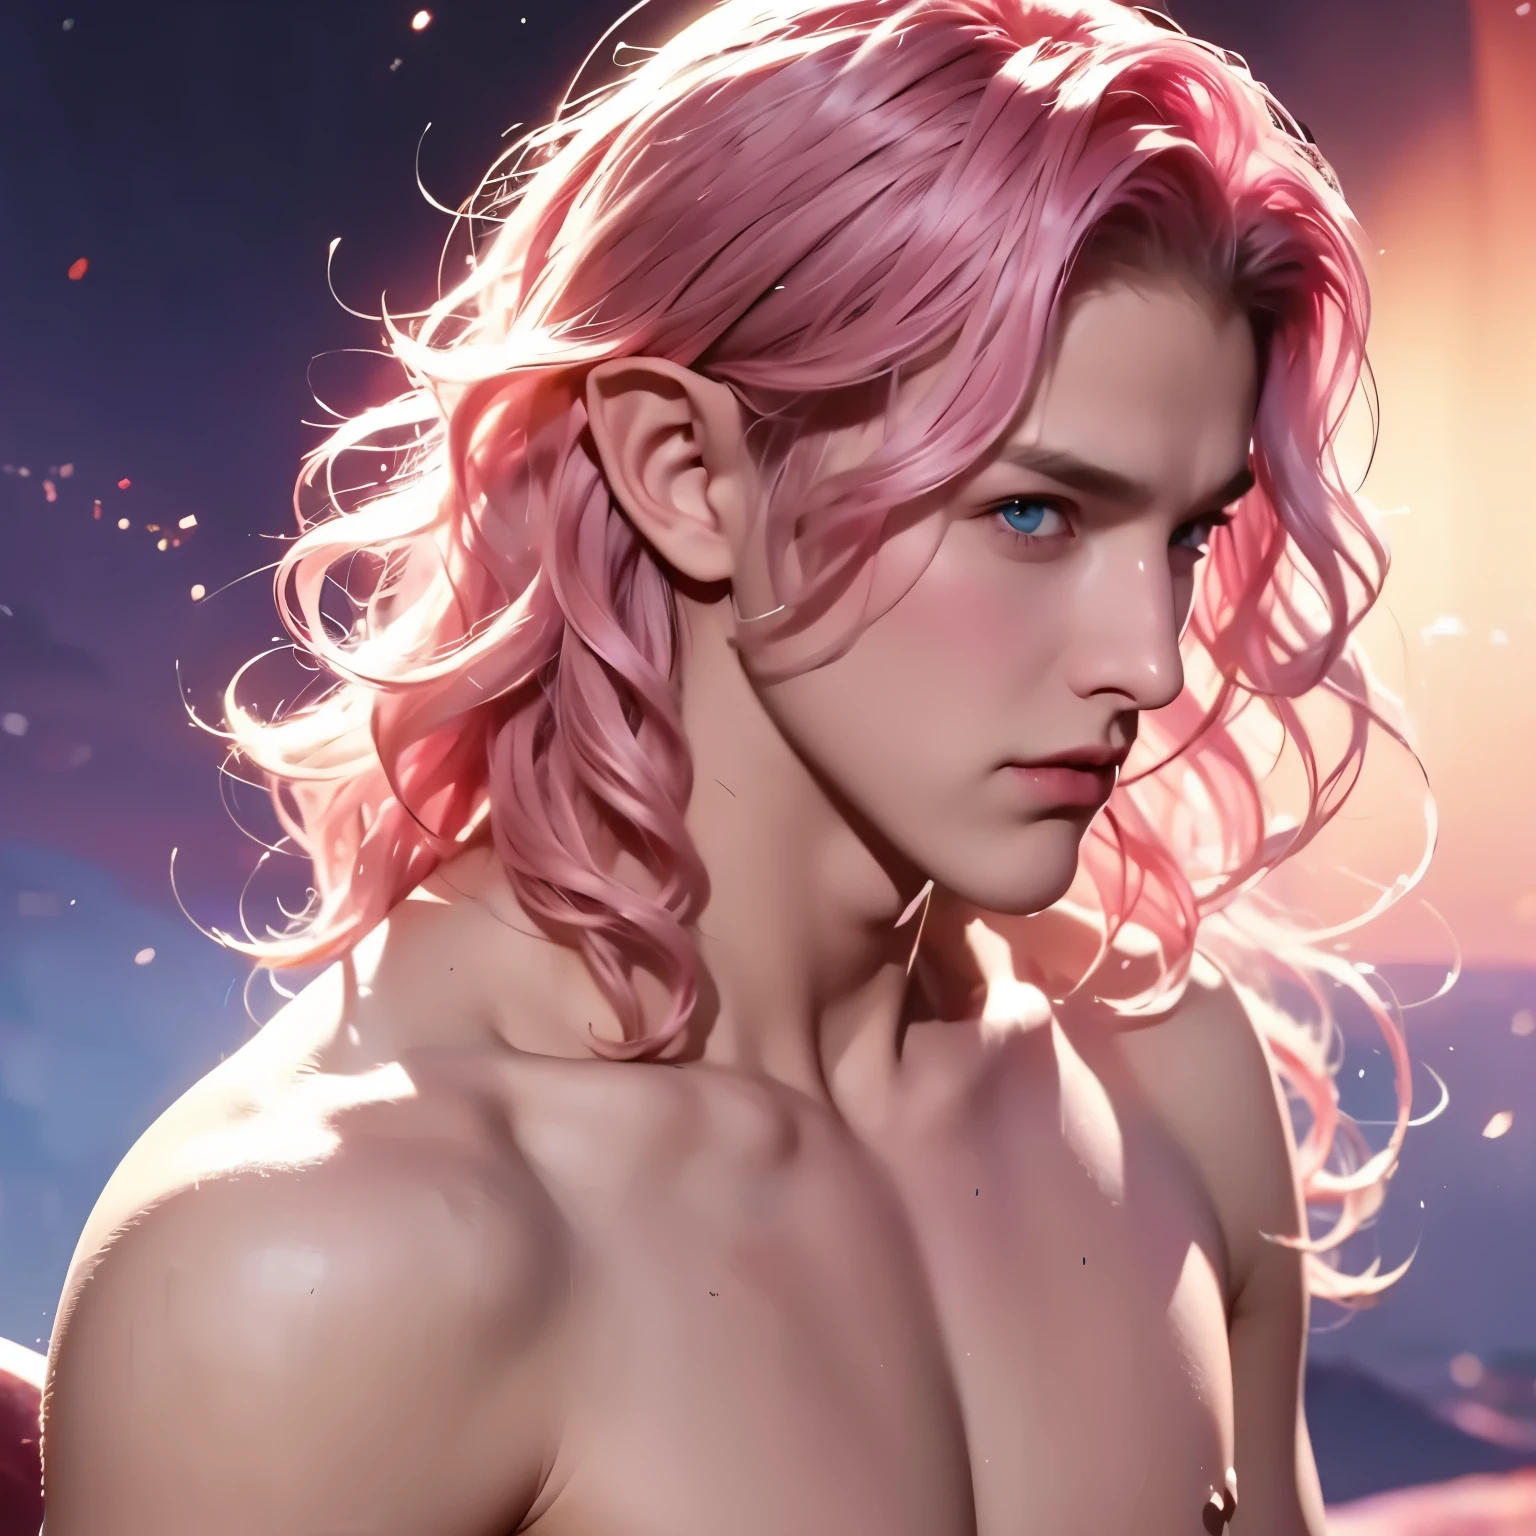 hombre, joven, chico, pelo corto ondulado, Cabello rosado, blue eyes, duende, sin camisa, fondo medieval